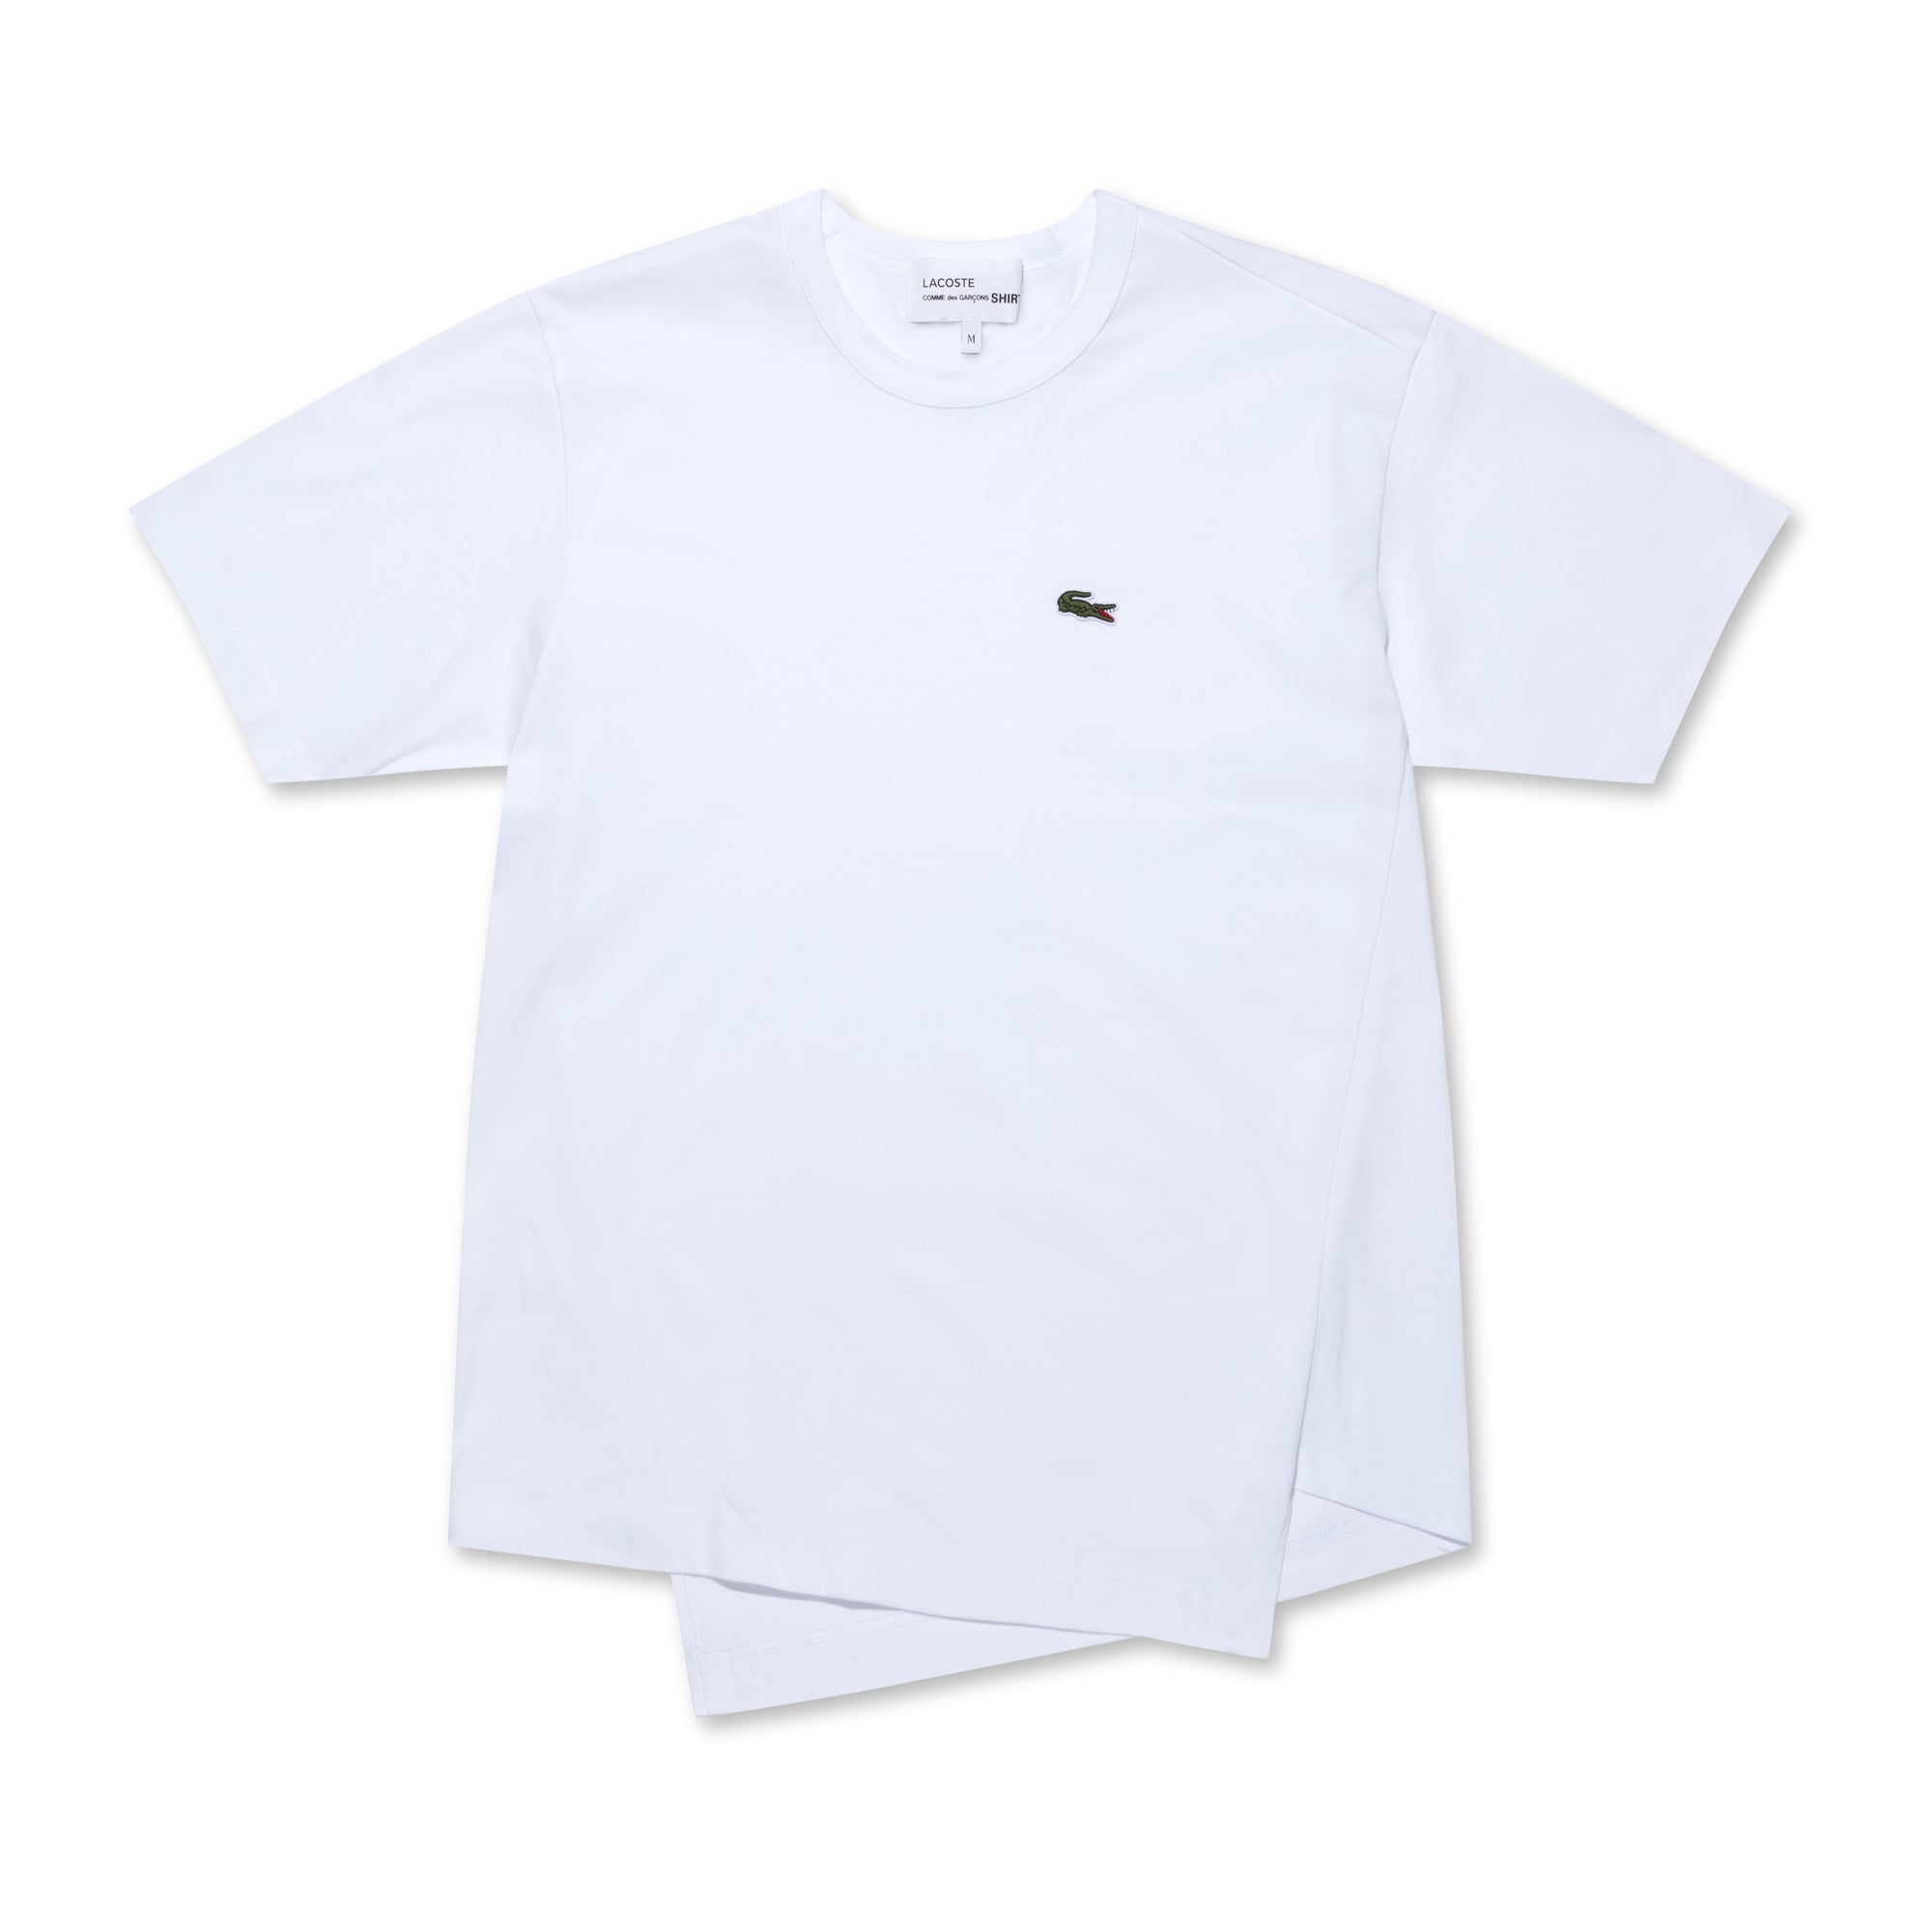 CDG Shirt - Lacoste Men’s T-Shirt - (White) view 1